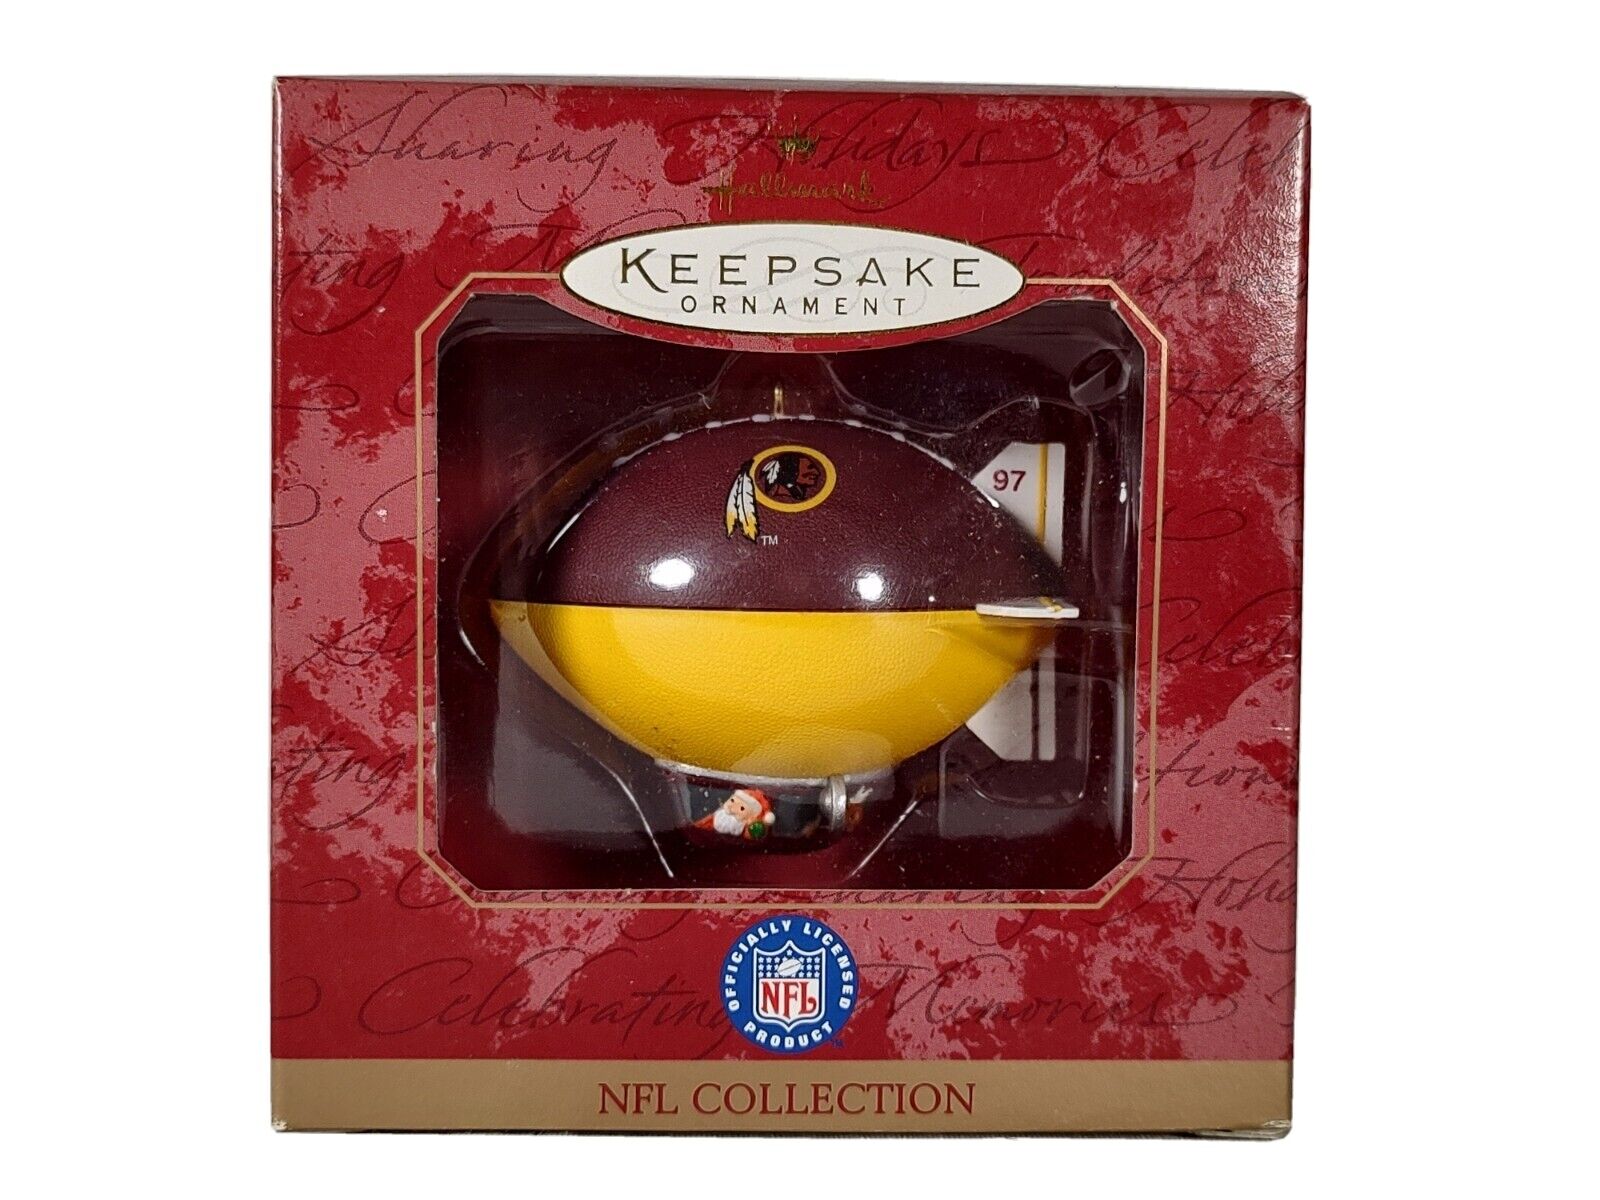 VTG Hallmark Keepsake Ornament 1997 NFL Washington Redskins Football Blimp Boxed